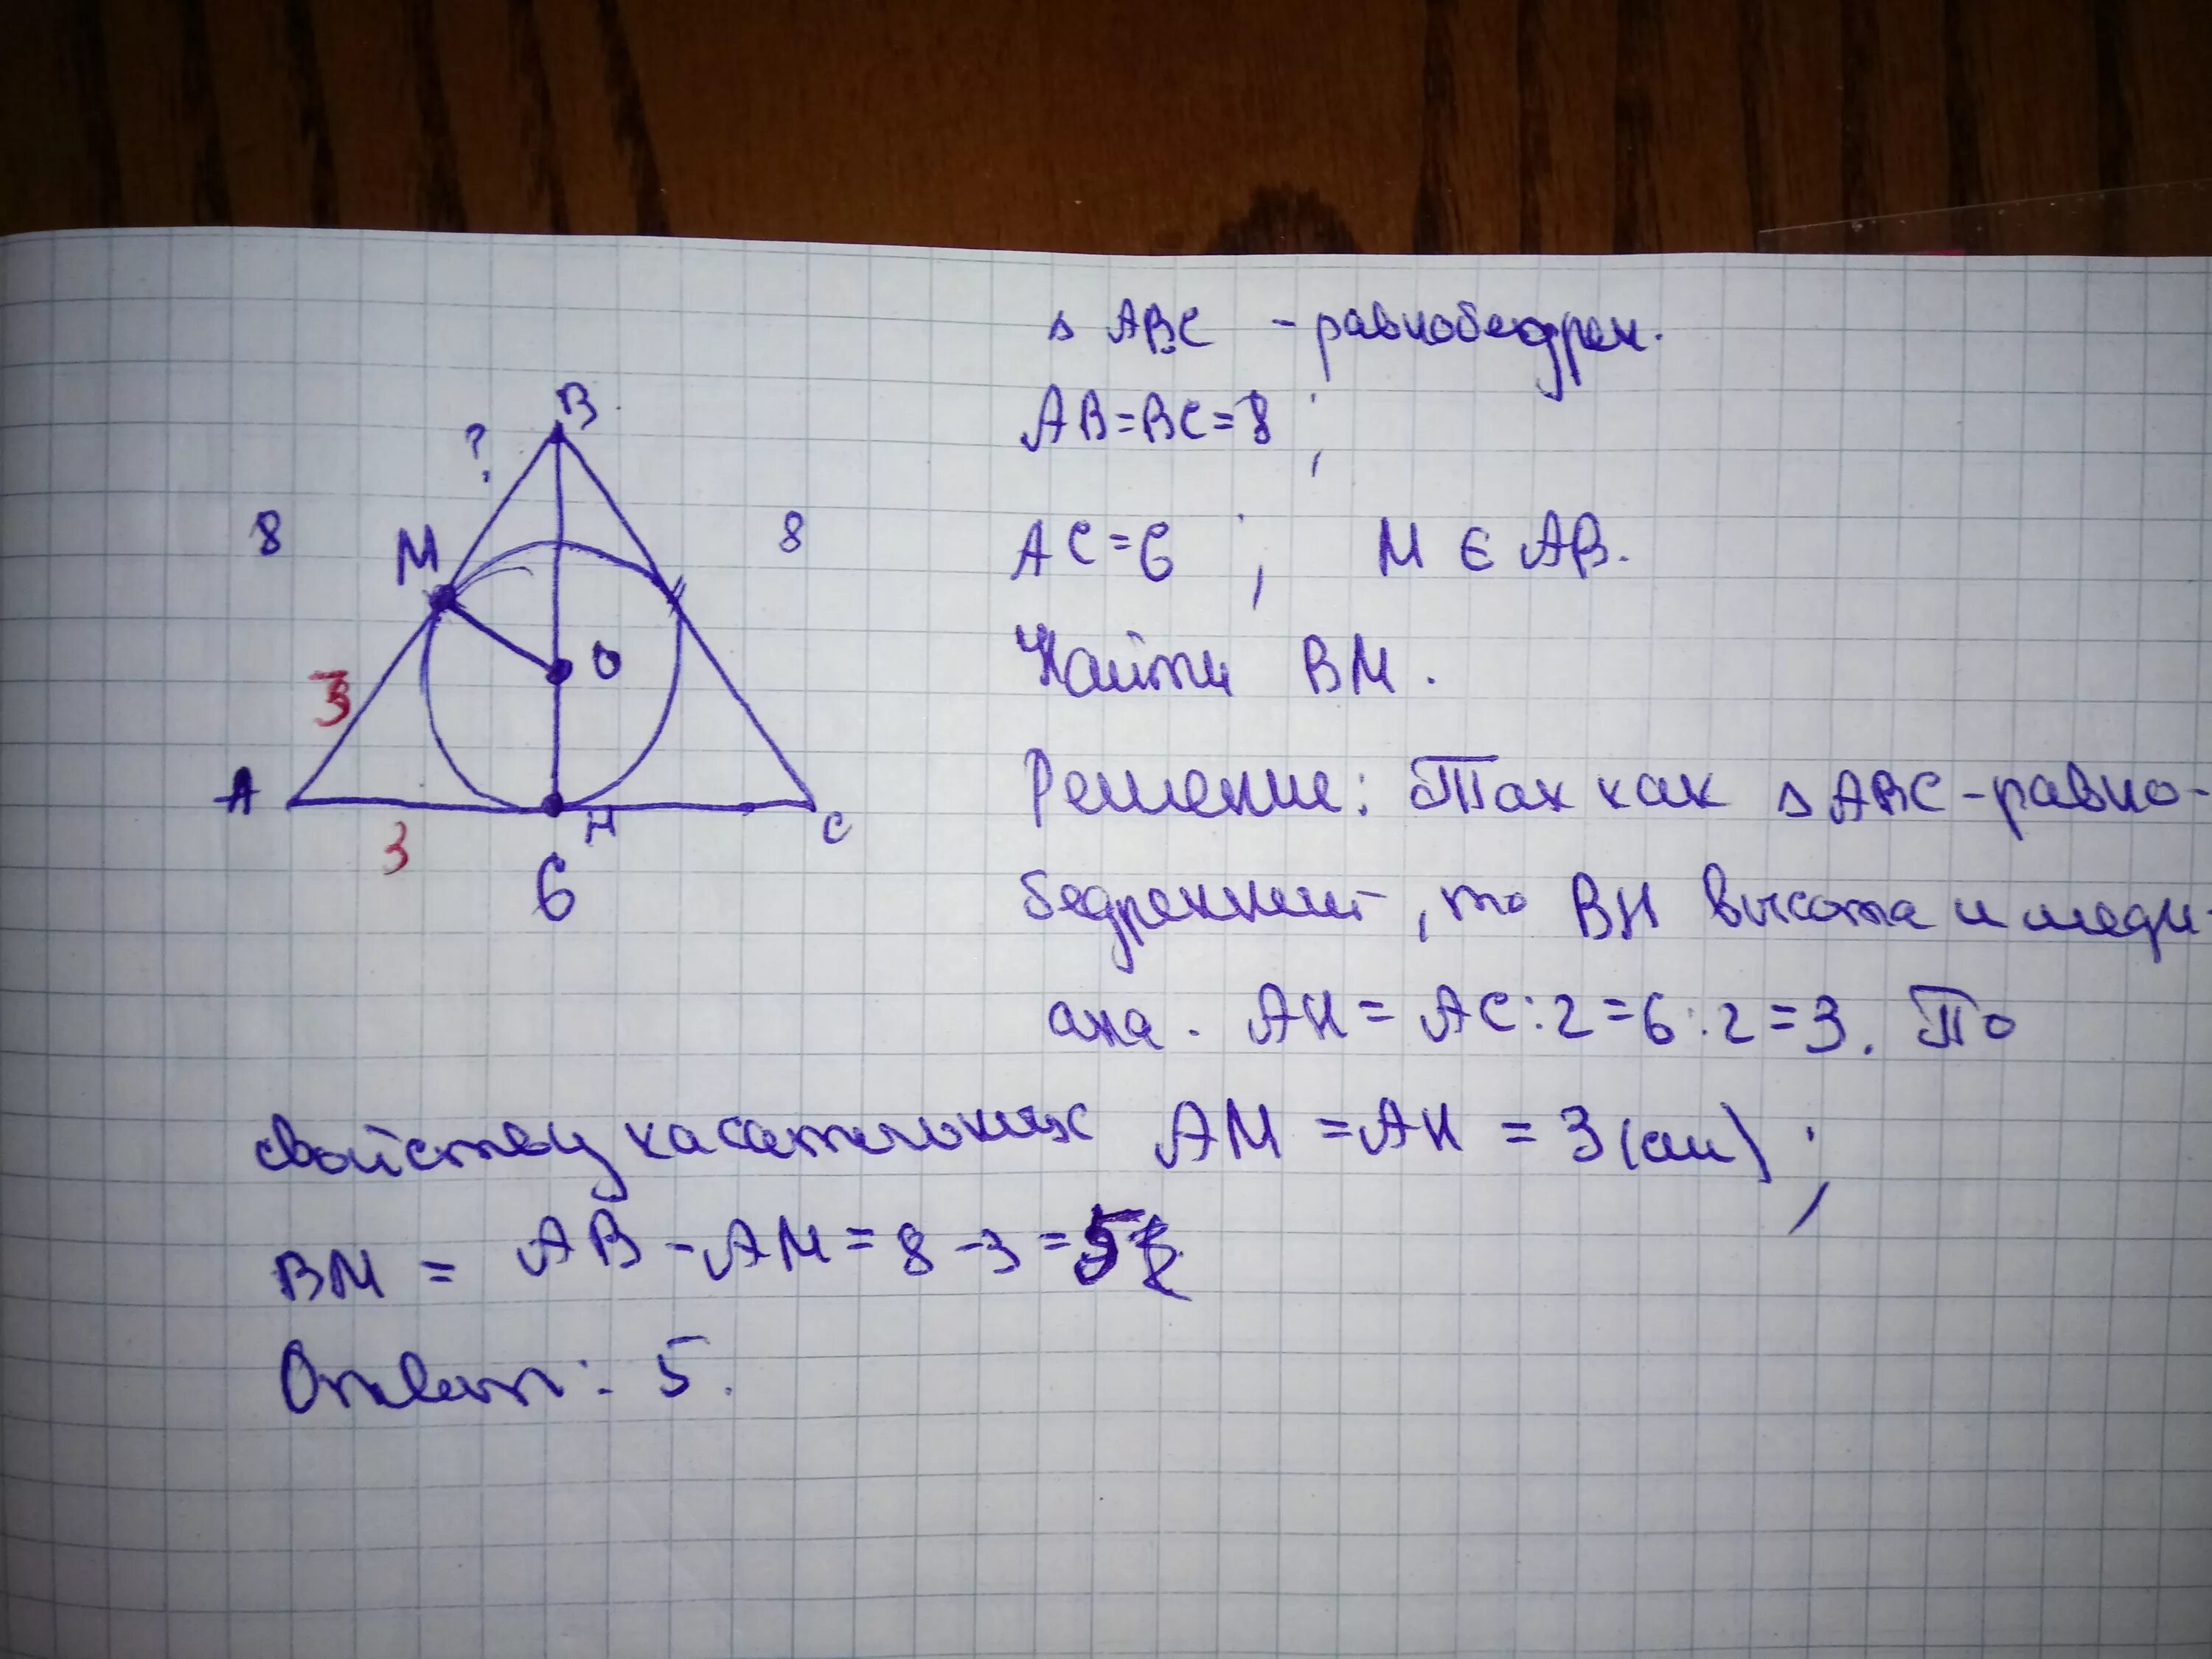 Ab равно 12 сантиметров найти bc. В треугольнике ABC AC BC ab 8. Дано треугольник ABC ab BC. Окружность вписанная в треугольник ab=BC=AC=12. В треугольнике АБС аб<BC<AC.